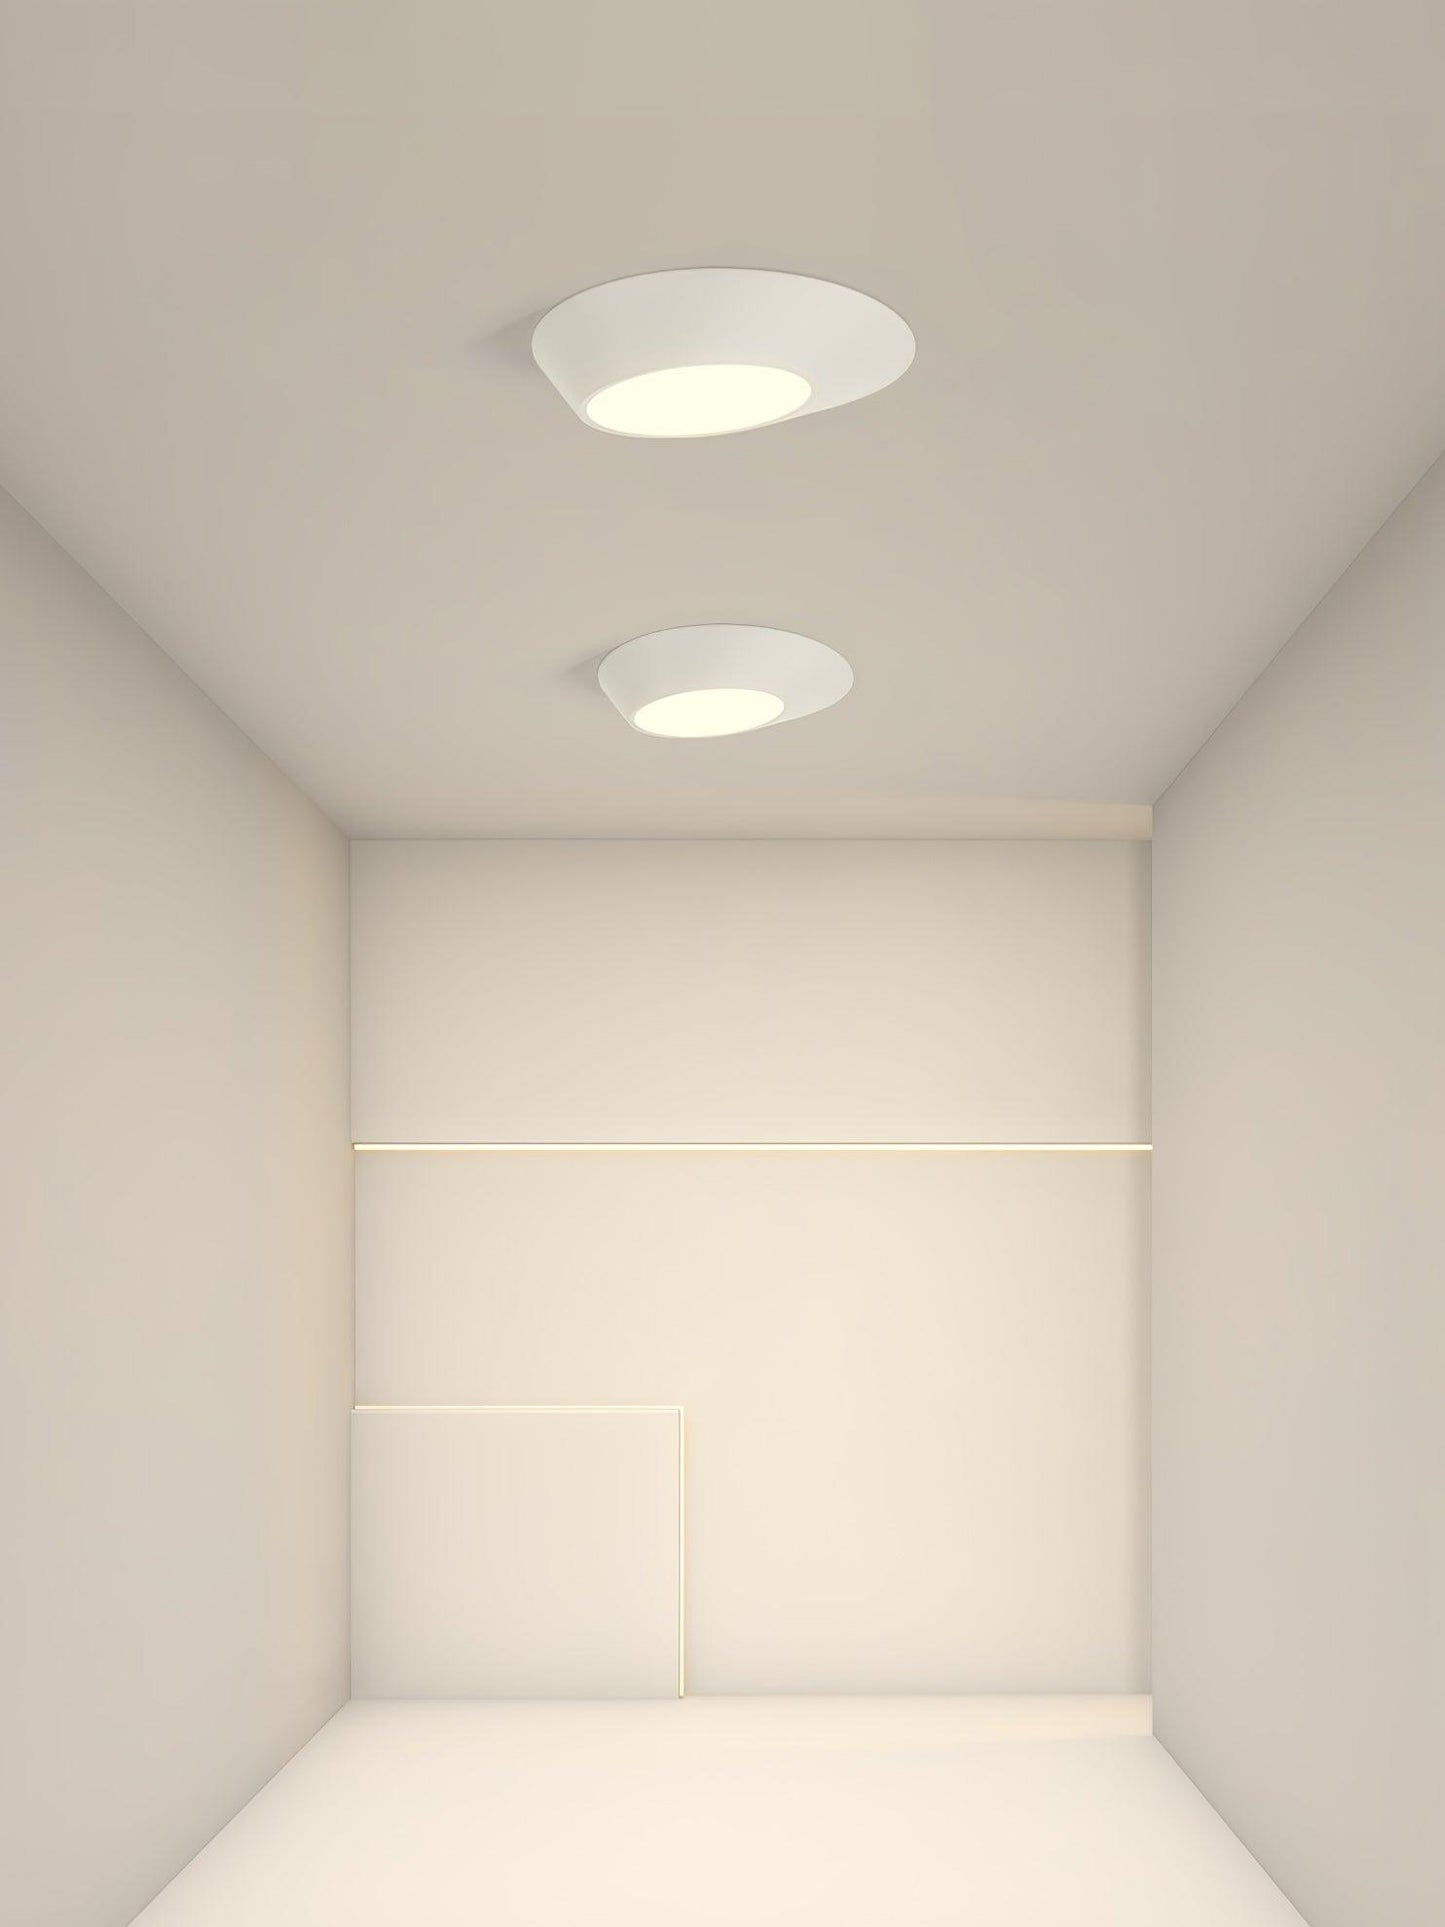 Angled Ceiling Light